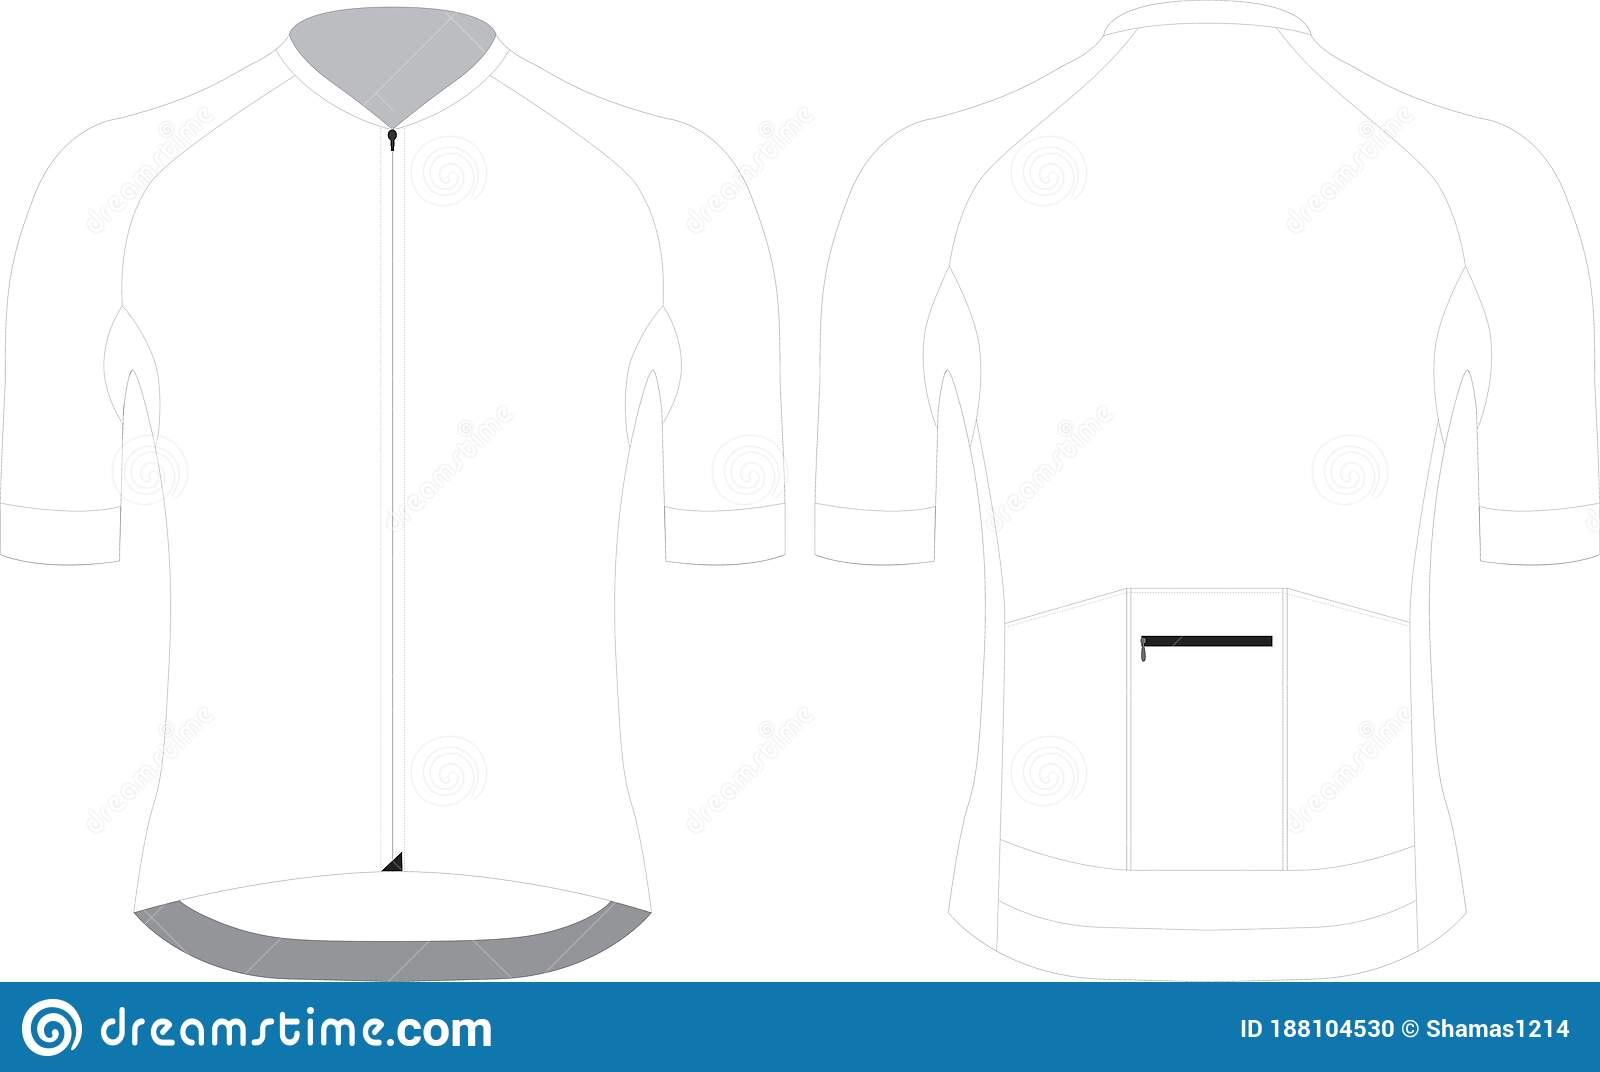 Cycling Short Sleeve Jersey Custom Design Blank Template within Blank Cycling Jersey Template